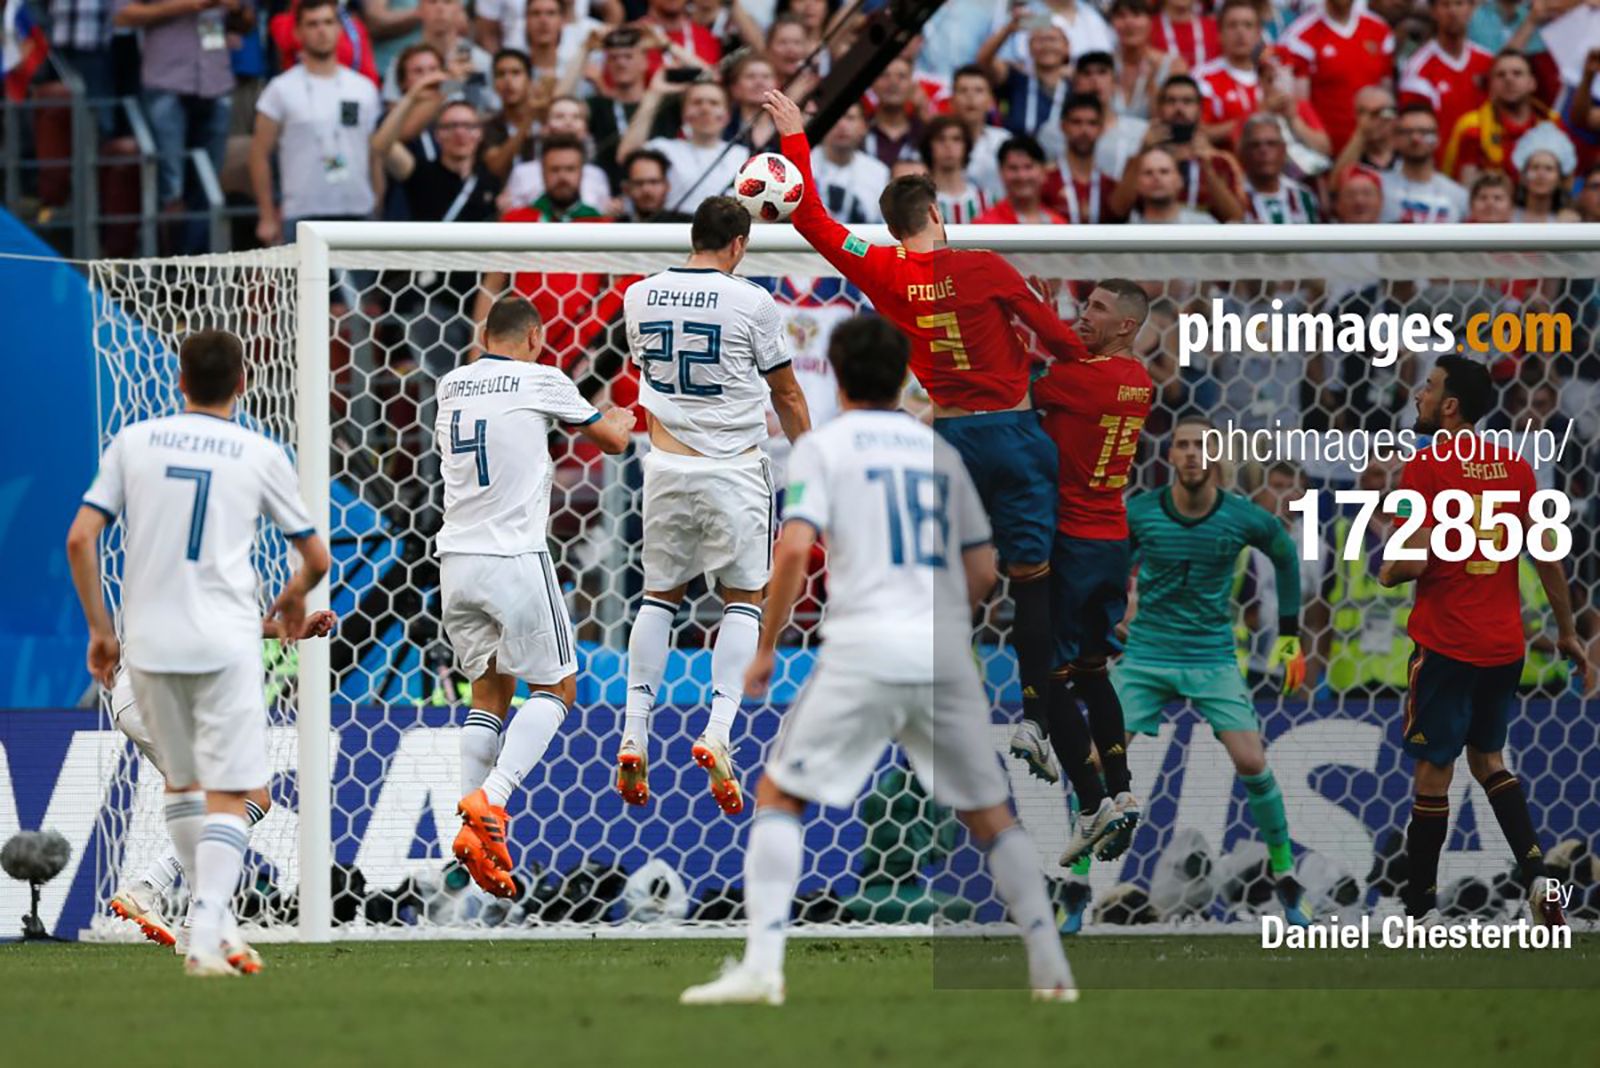 Gerard Pique concedes Spain’s penalty